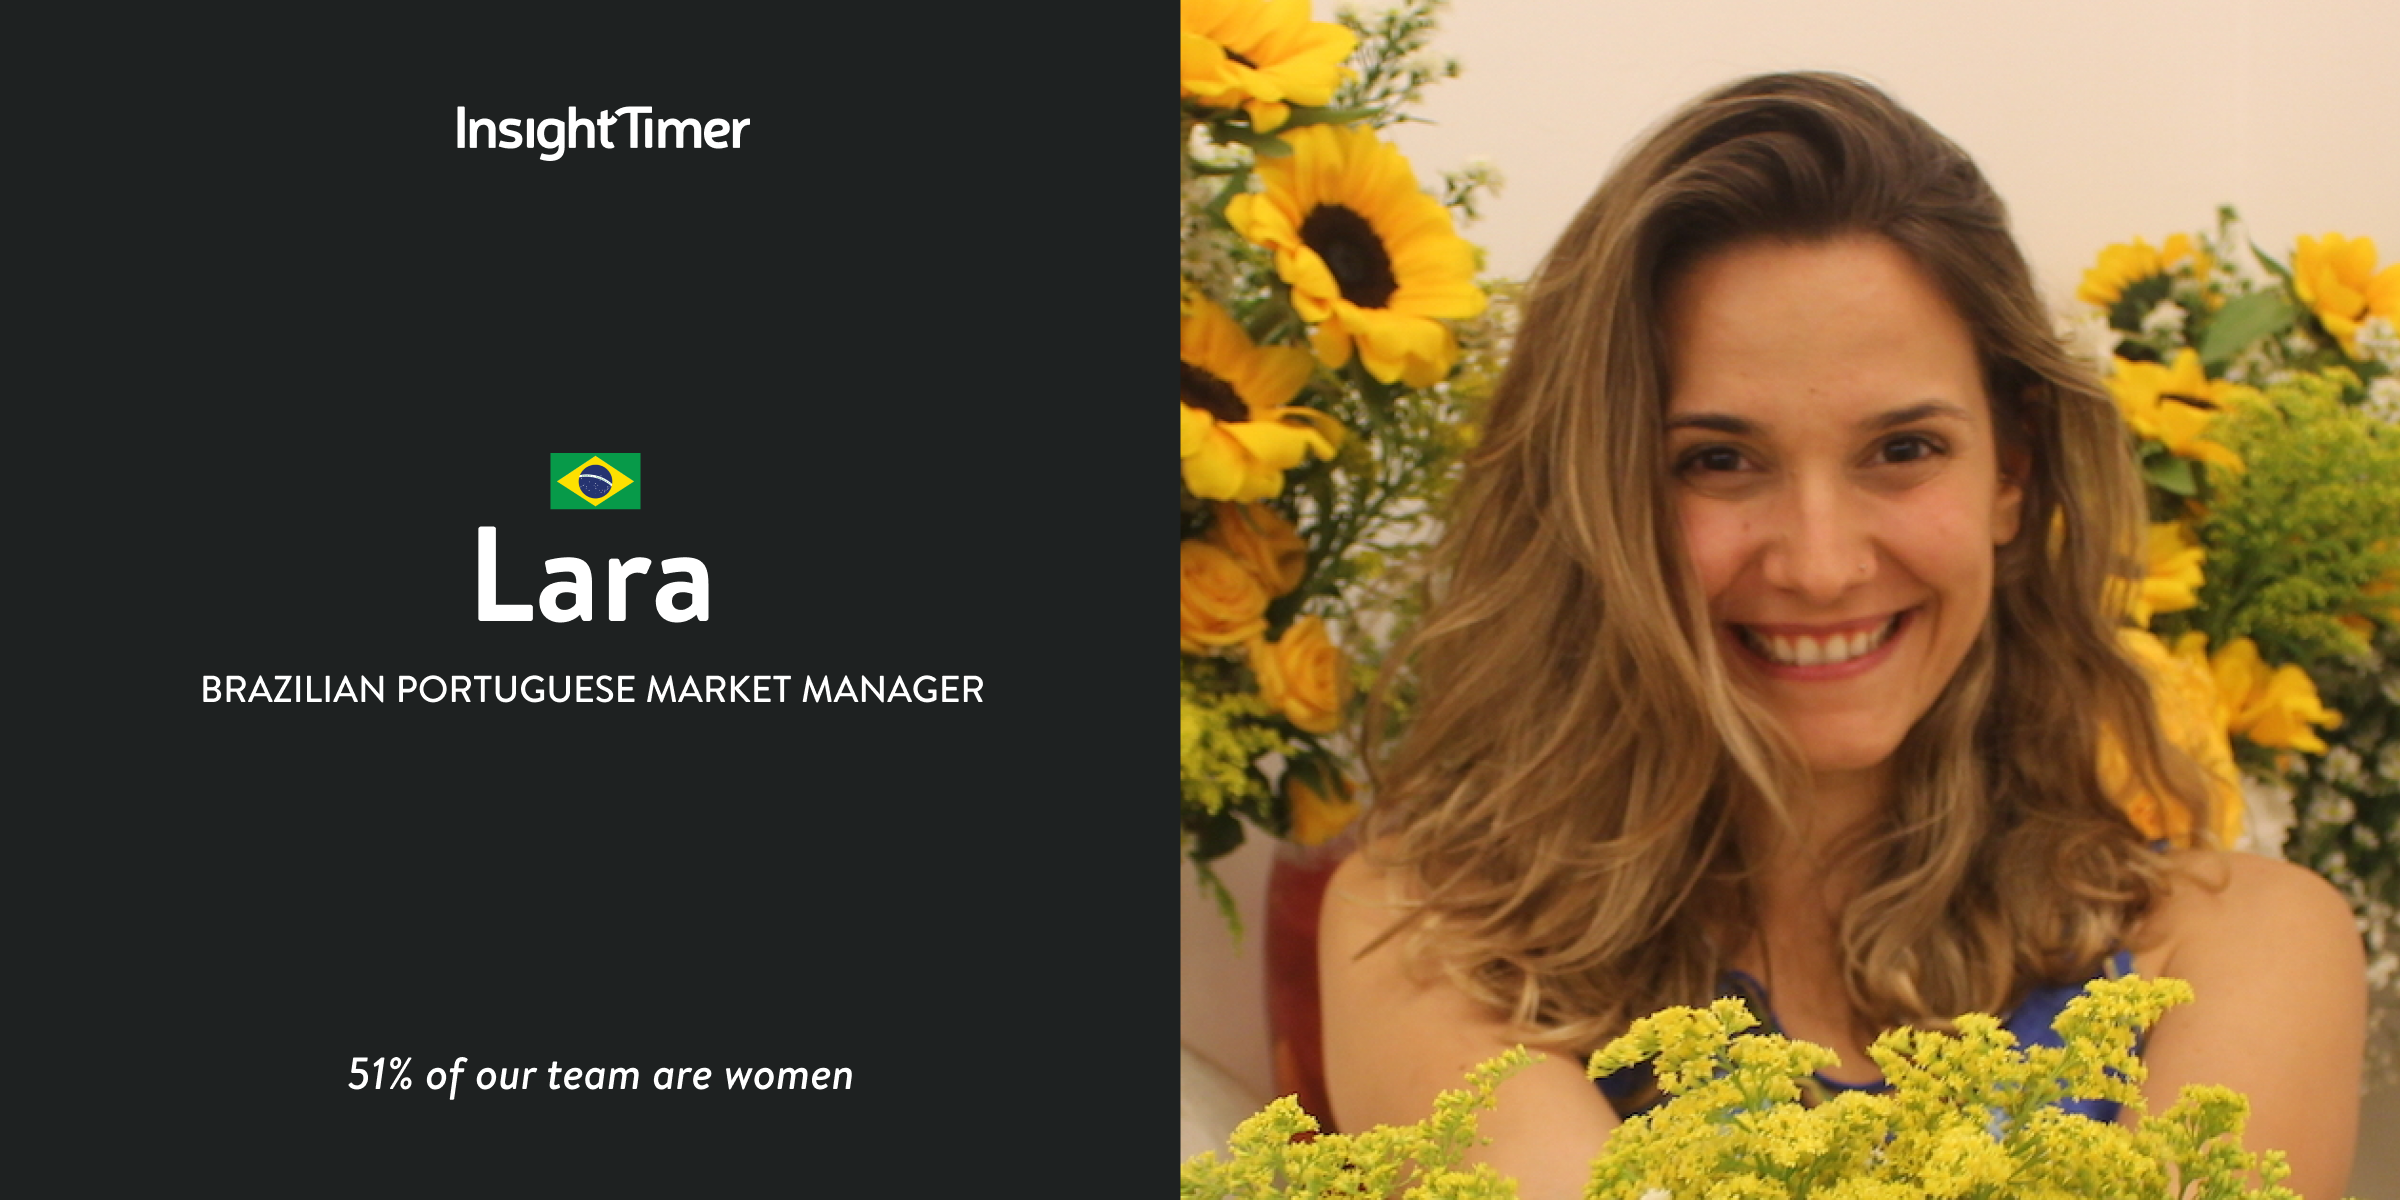 Meet Lara – Brazilian Portuguese Market Manager